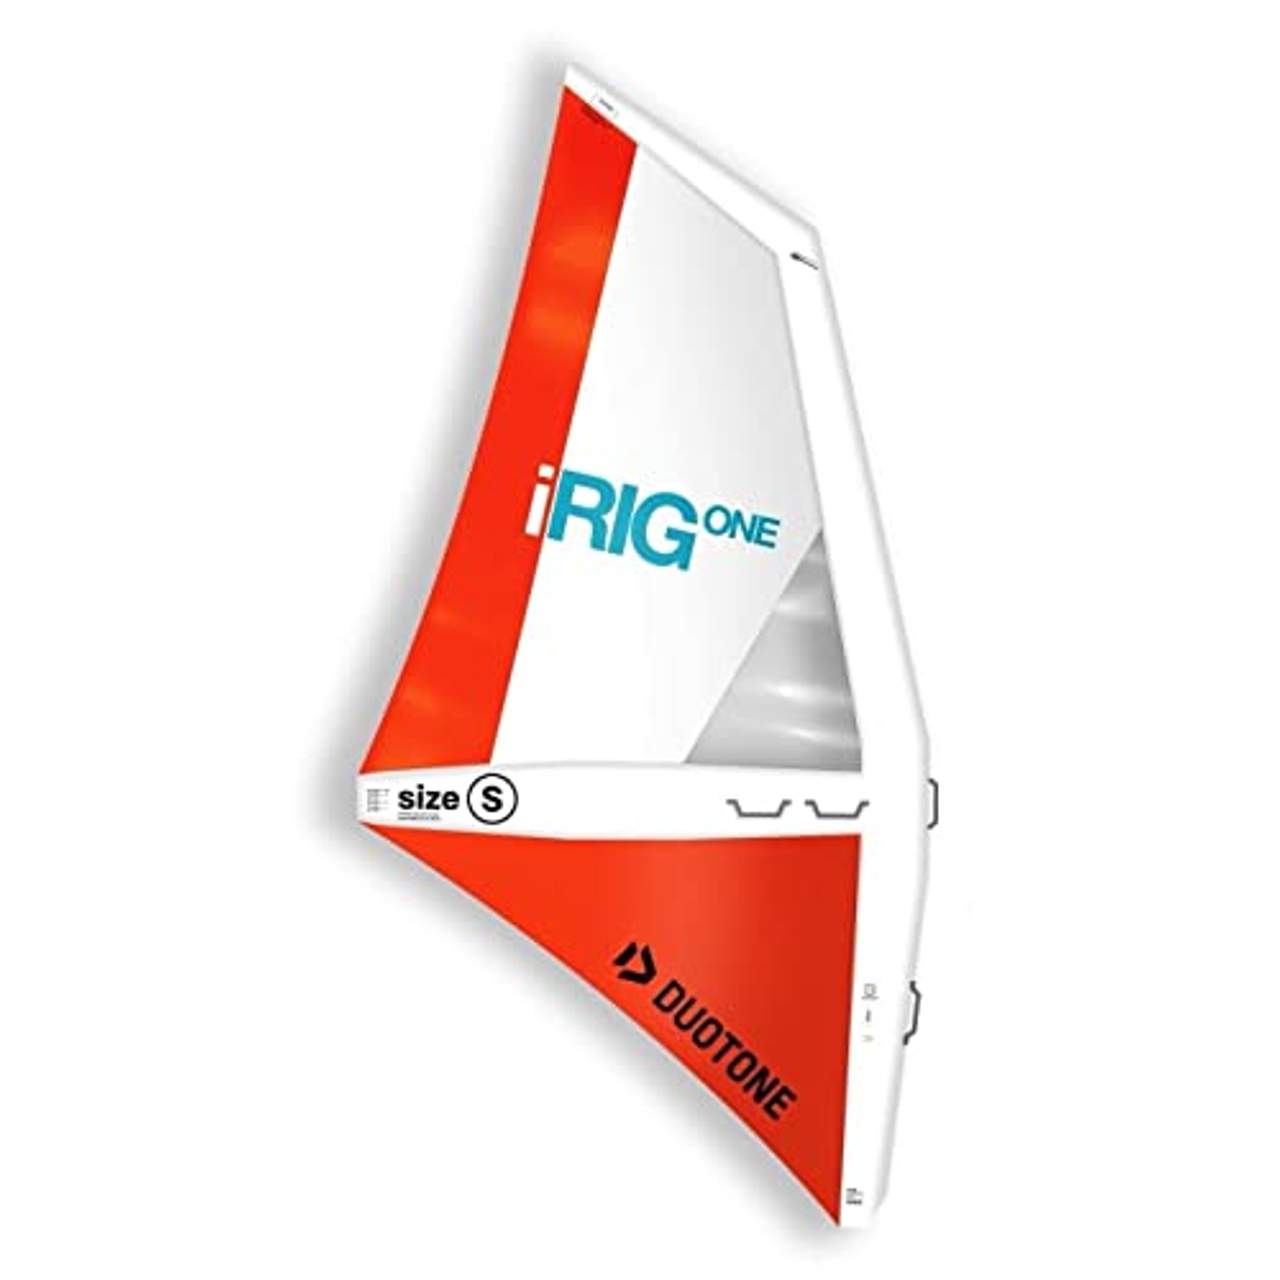 F2 Glide Windsurf 10,8" iSUP Board Stand Up Paddle aufblasbares